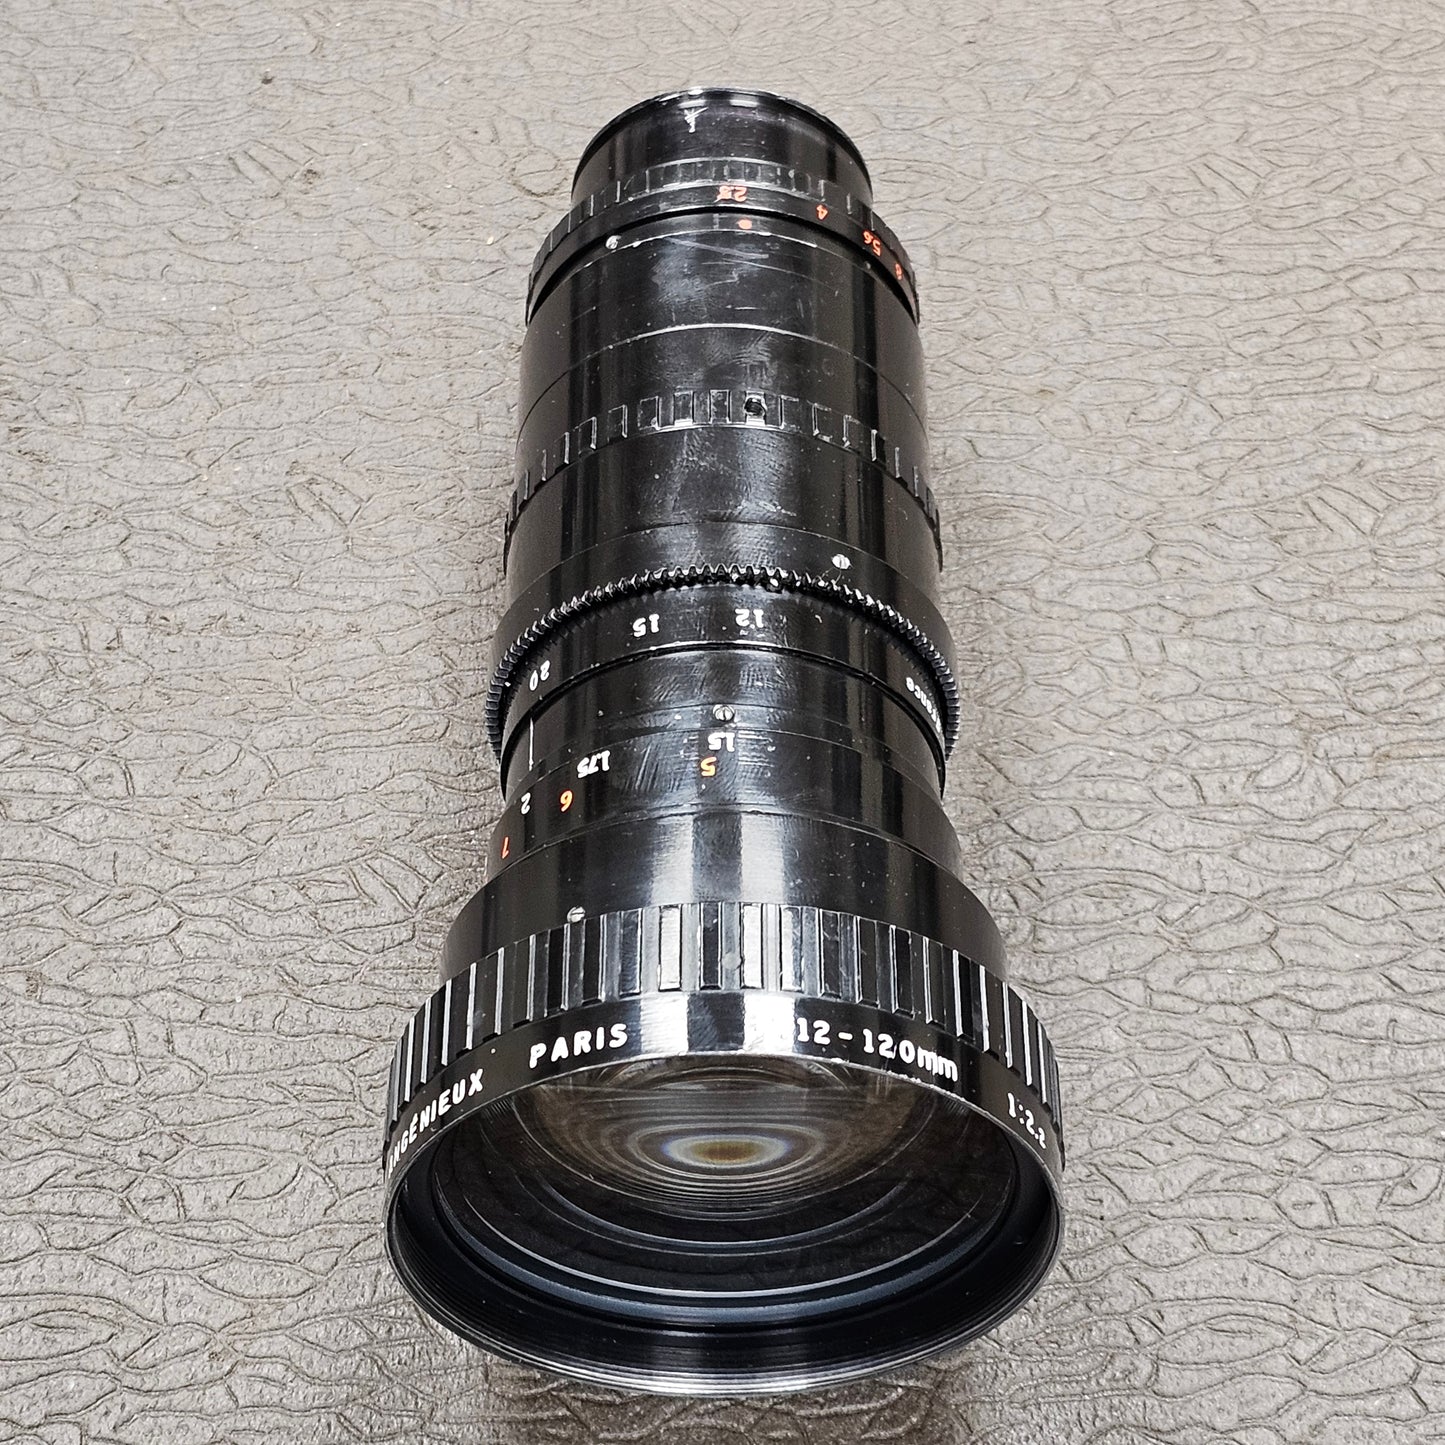 Angenieux 12-120mm T2.5 Type 10 x 12A Arri Standard Mount Zoom lens S# 1240405